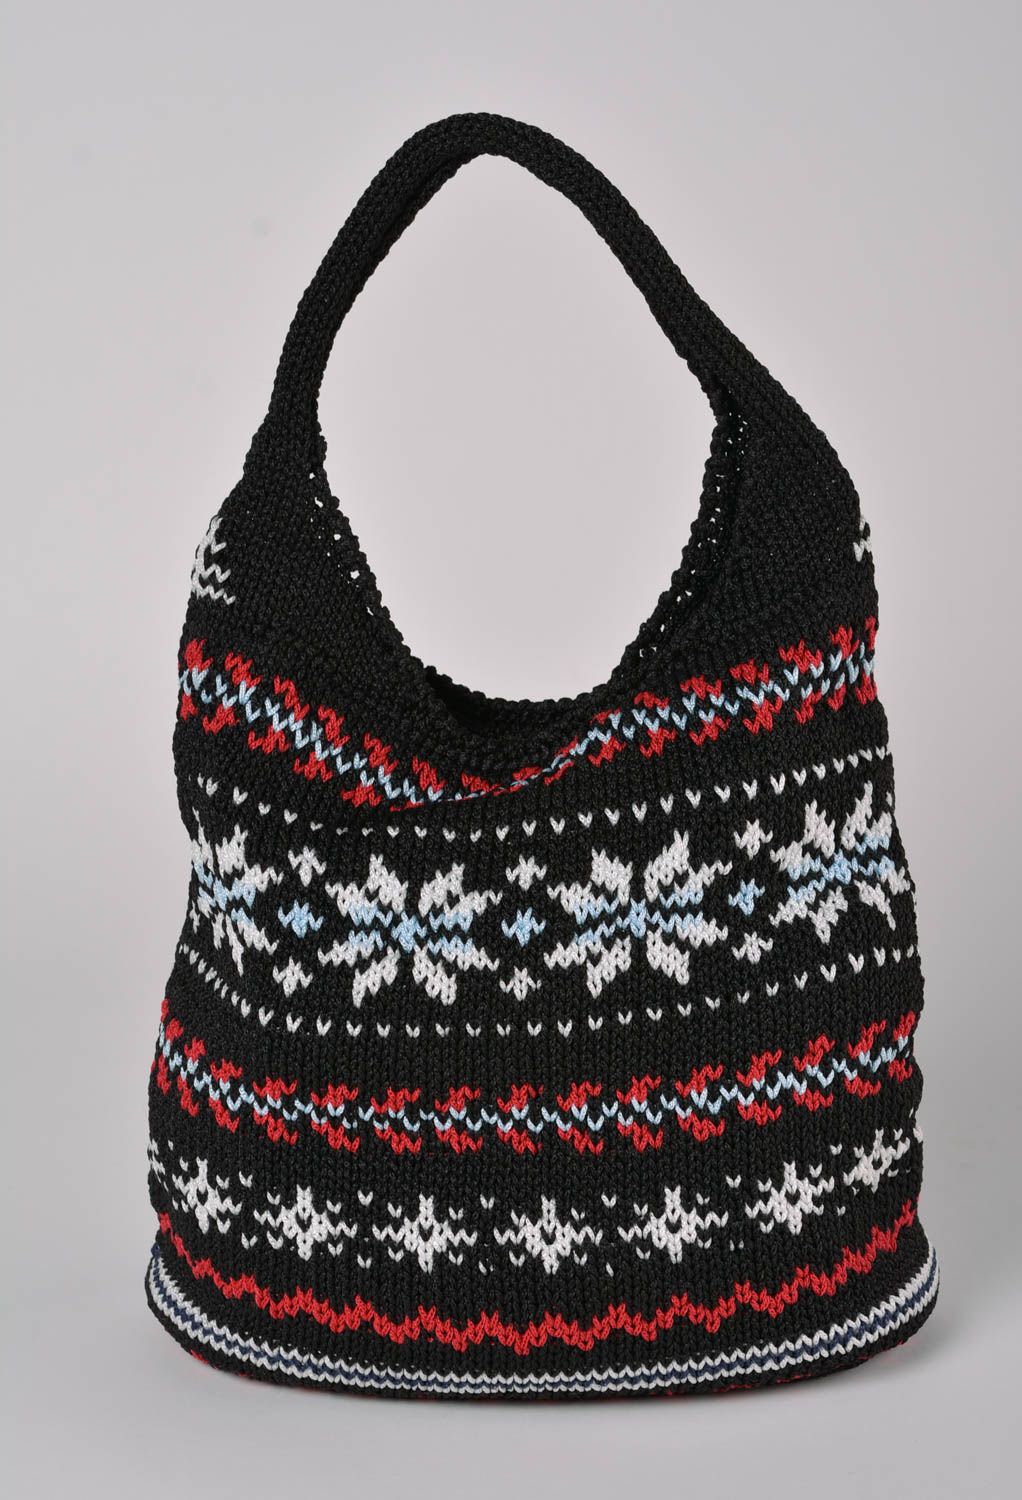 Crocheted female handbag of dark red color with black lining handmade purse photo 1